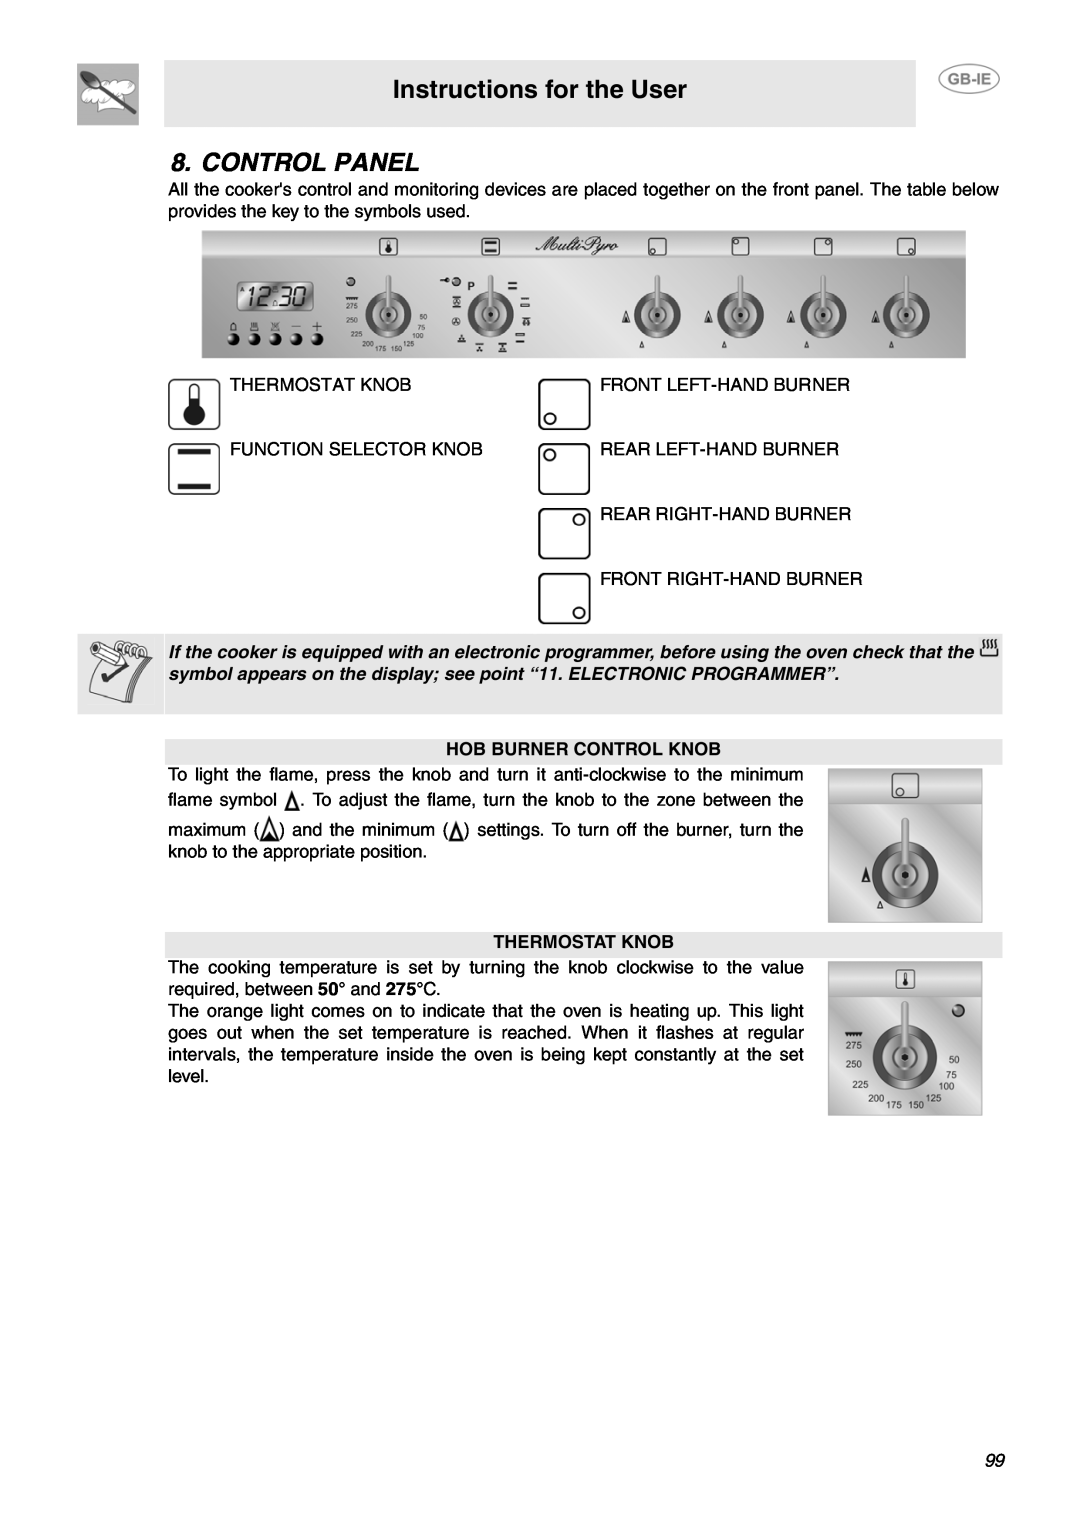 Smeg B71MPX5 manual Control Panel, Instructions for the User, Hob Burner Control Knob, Thermostat Knob 